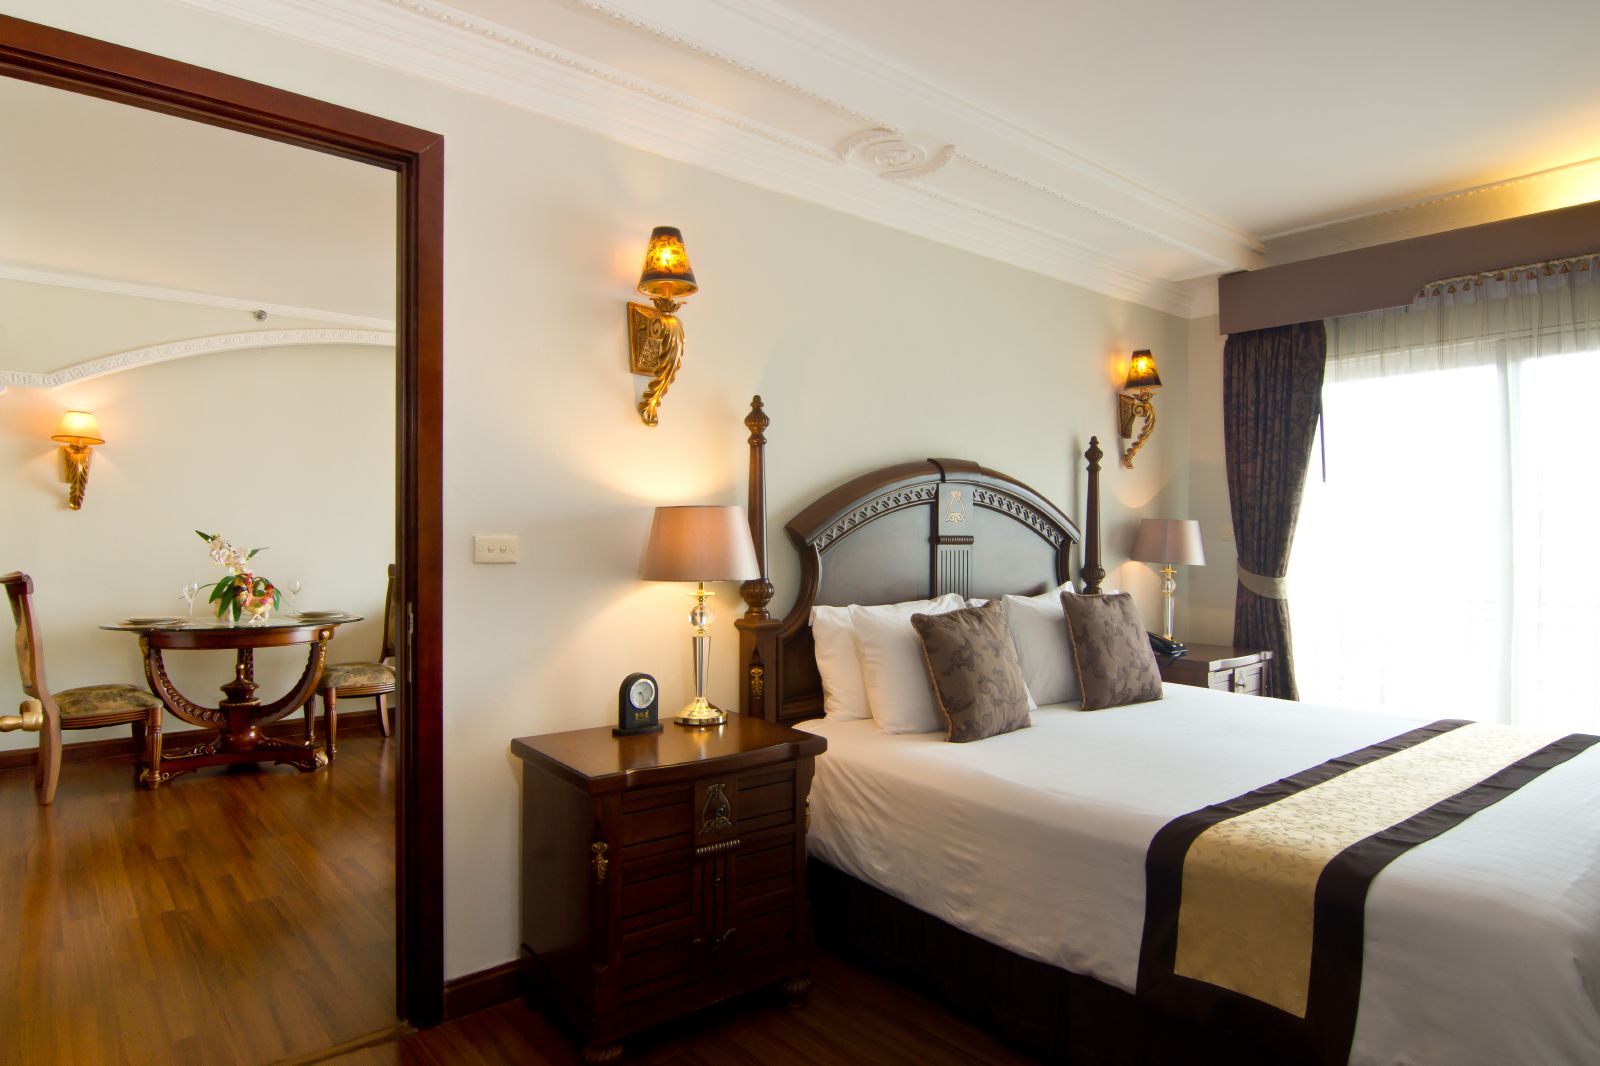 One bedroom suite. Паттайя Таиланд отель ЛК Метрополь. Бангламунг Чонбури Таиланд.